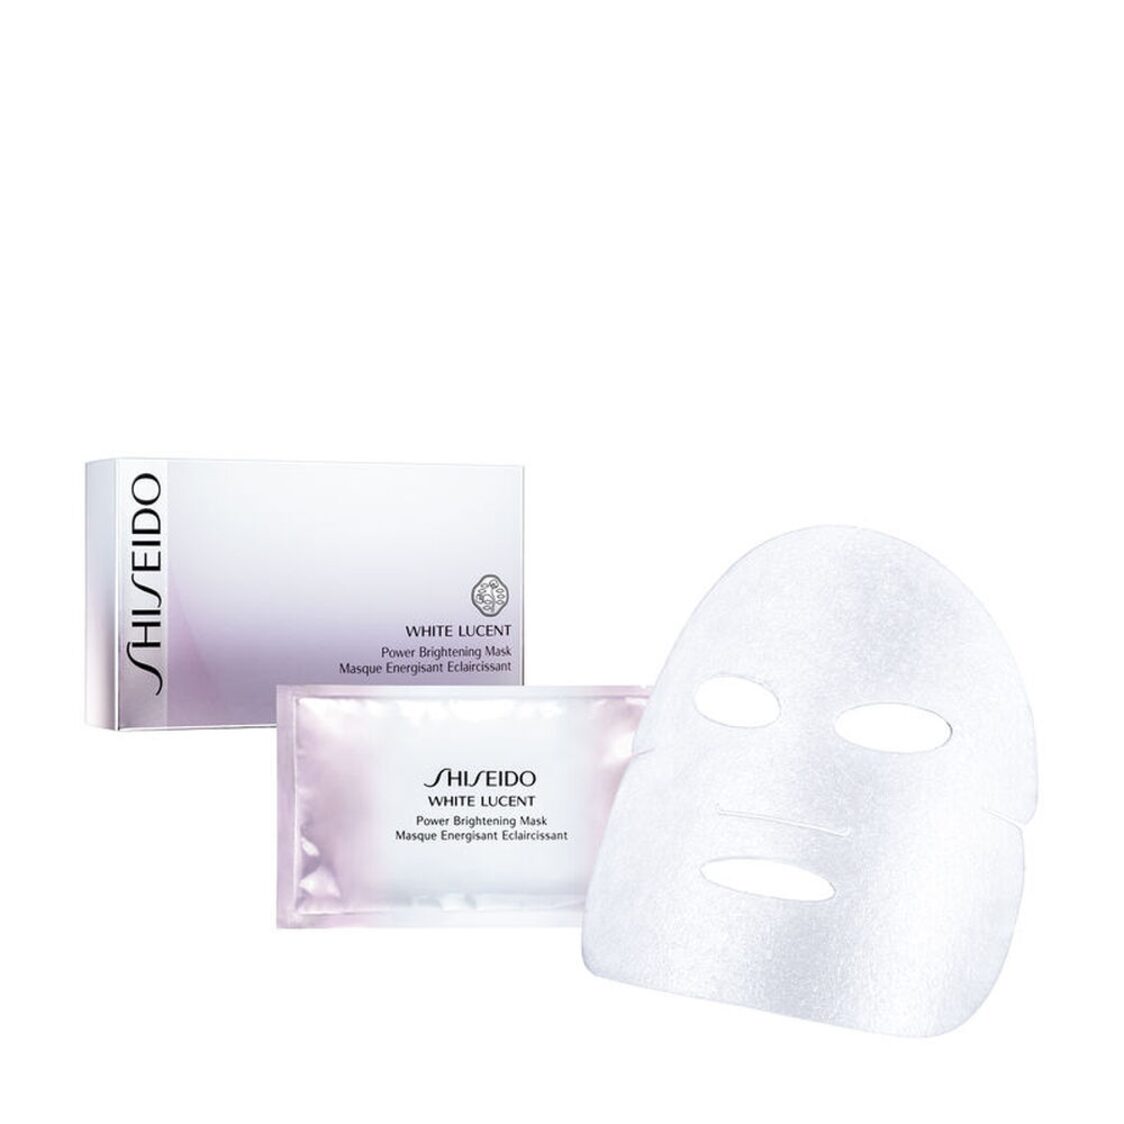 Shiseido White Lucent Power Brightening Mask 6 Sheets